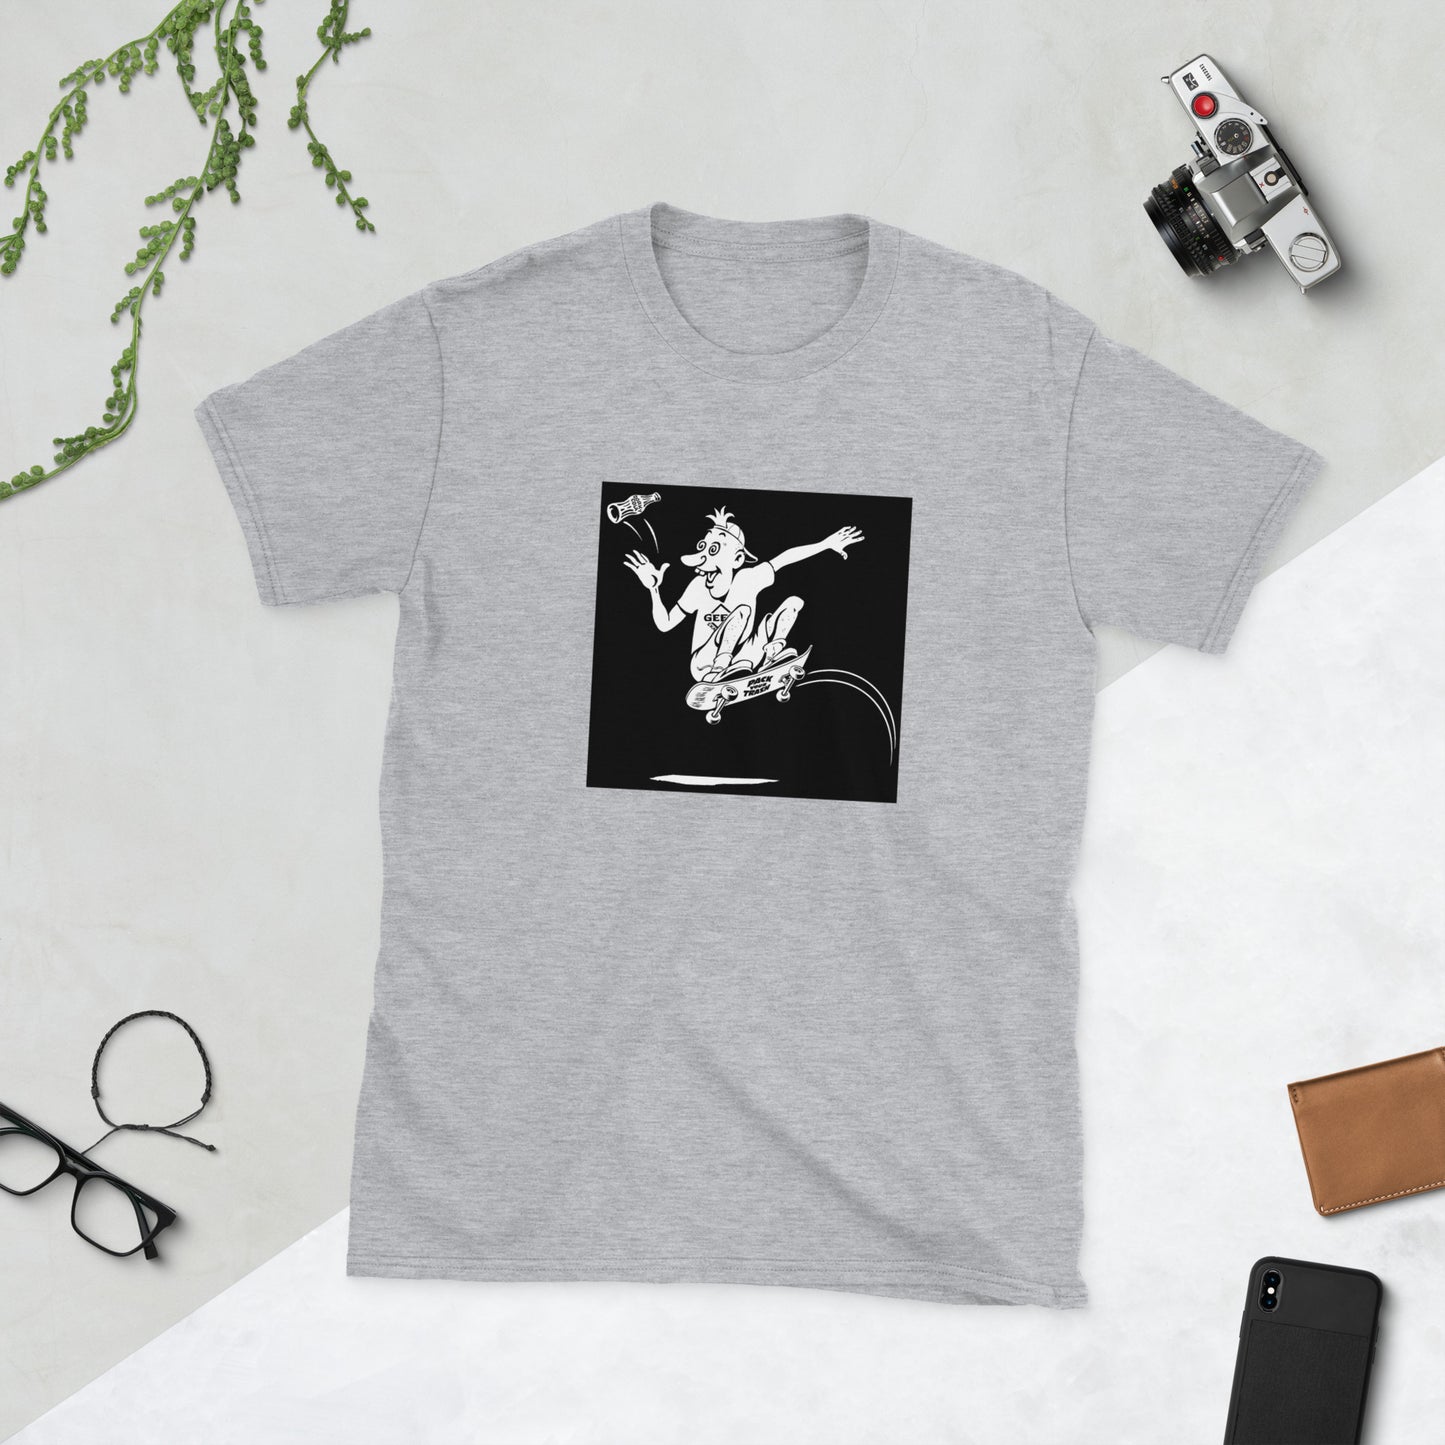 Pack Your Trash - Skater Geek - Dark print on light shirt - Short-Sleeve Unisex T-Shirt